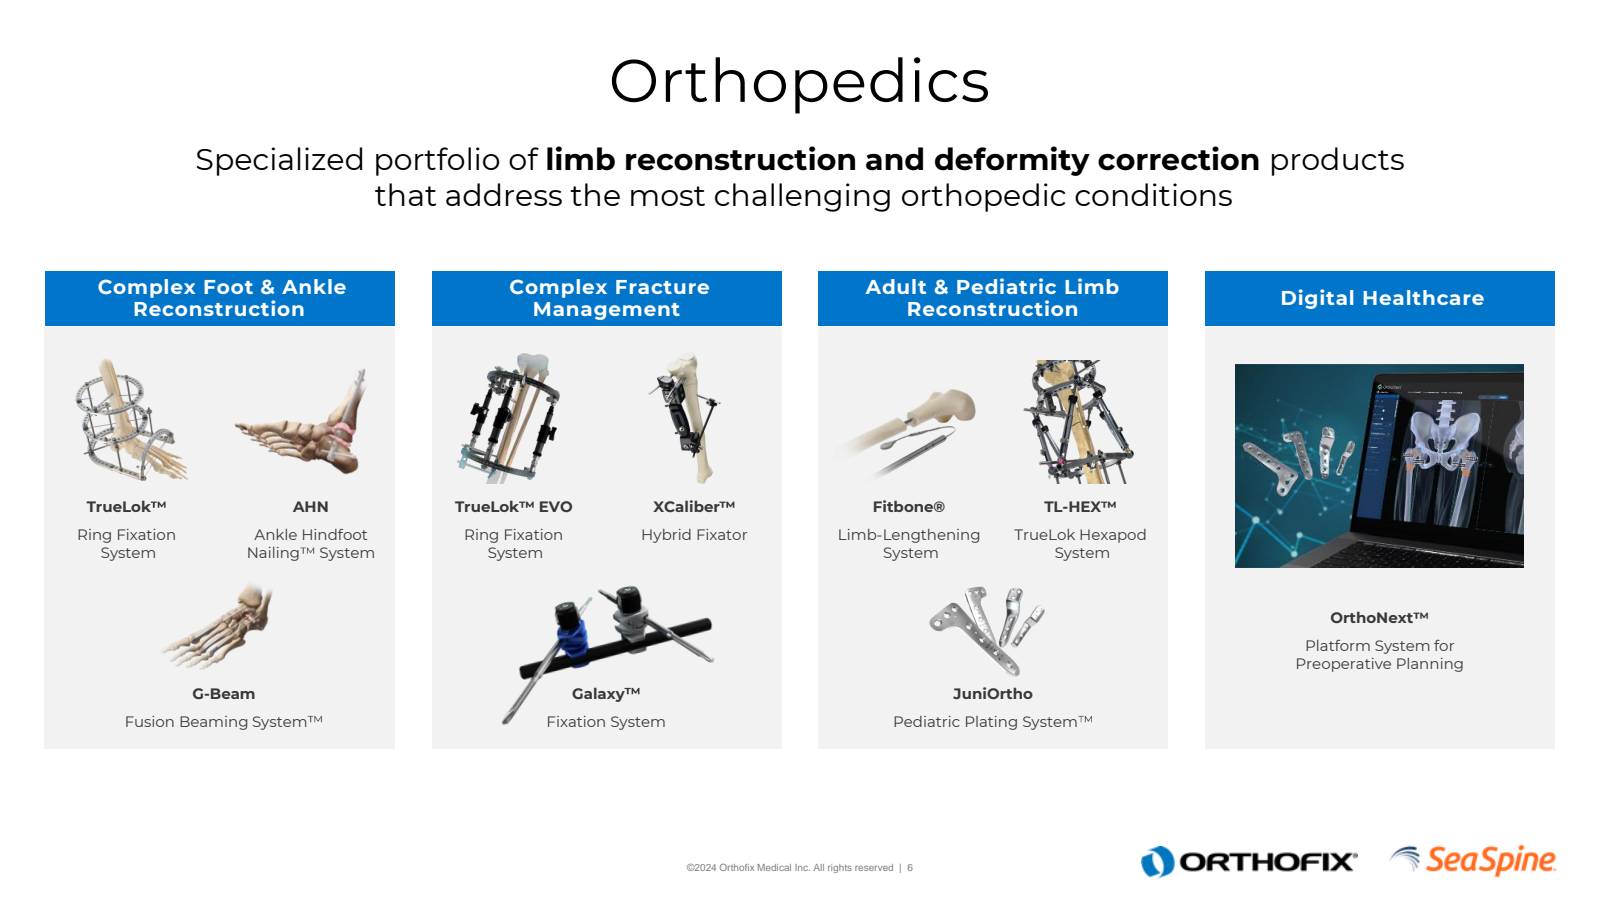 Orthopedics 

Specia